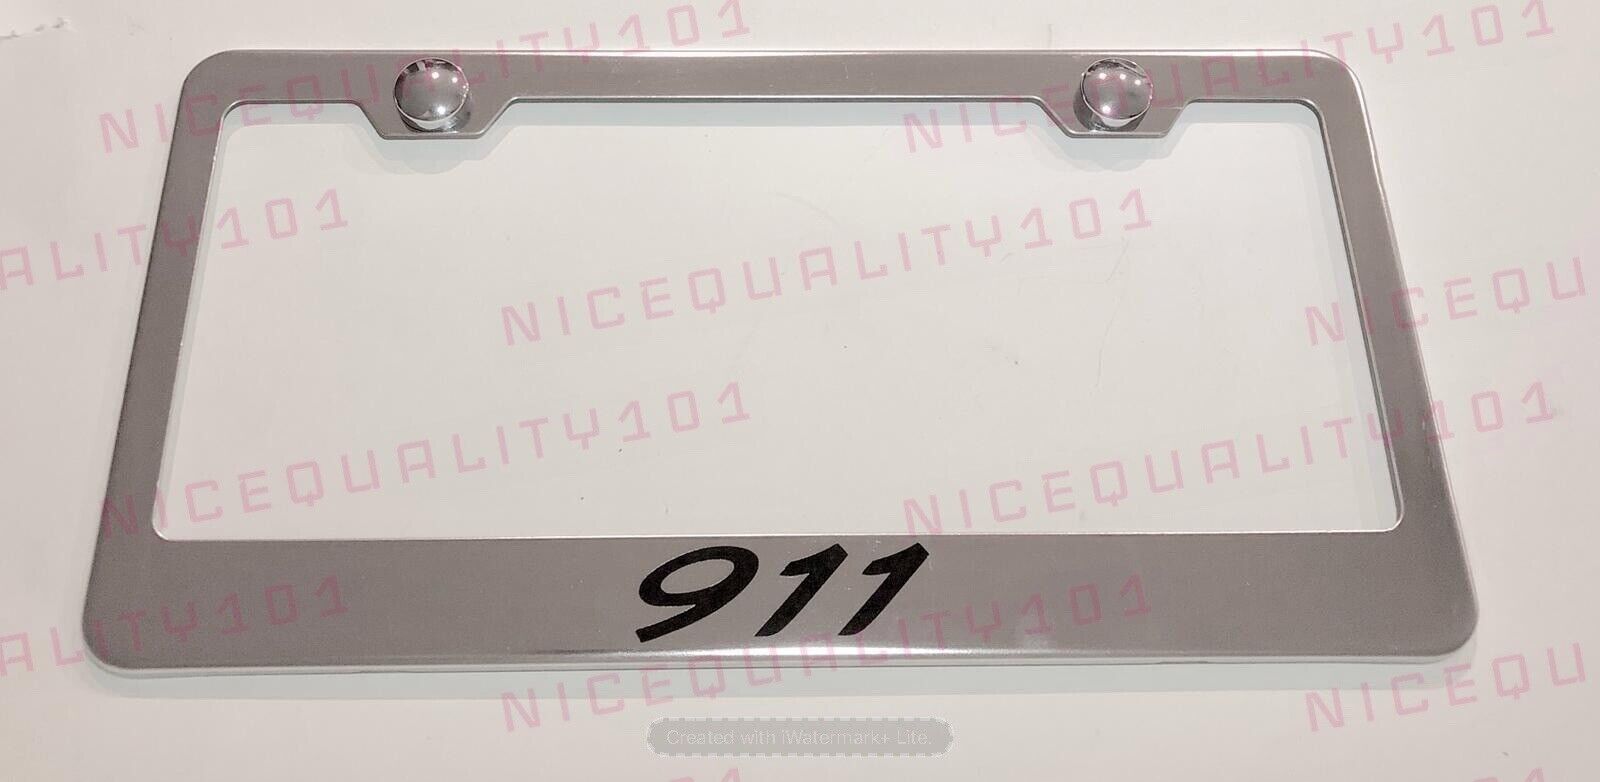 911 Stainless Steel Chrome Finished License Plate Frame Holder